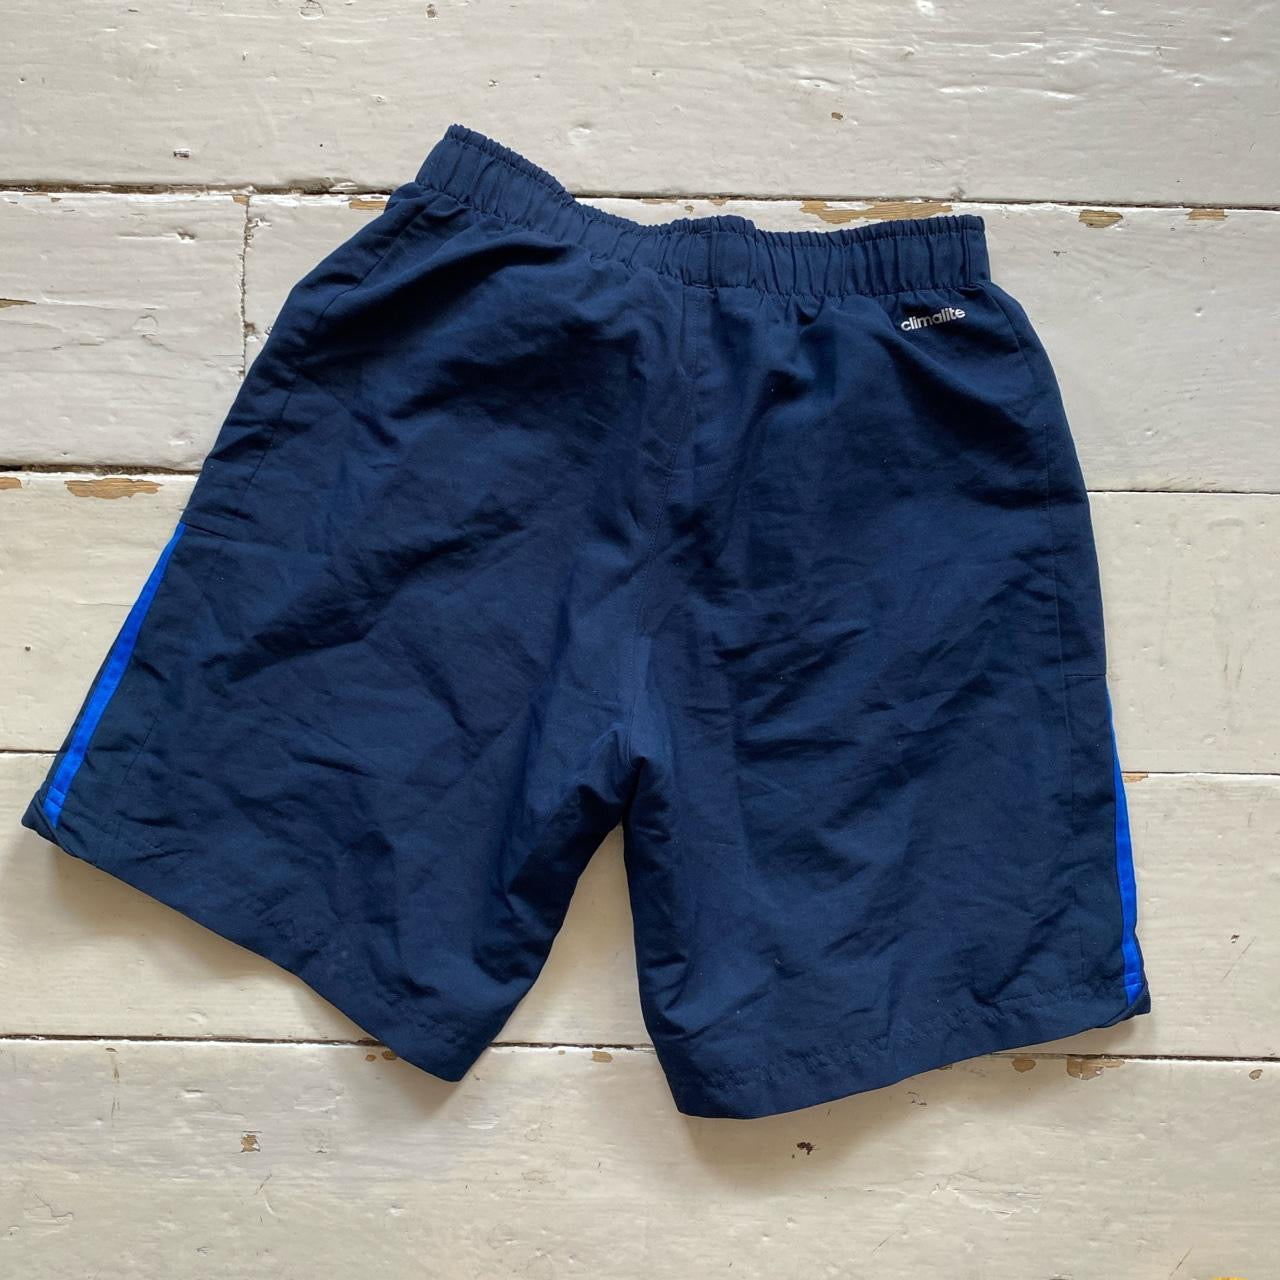 Adidas Navy Shell Shorts (Small)